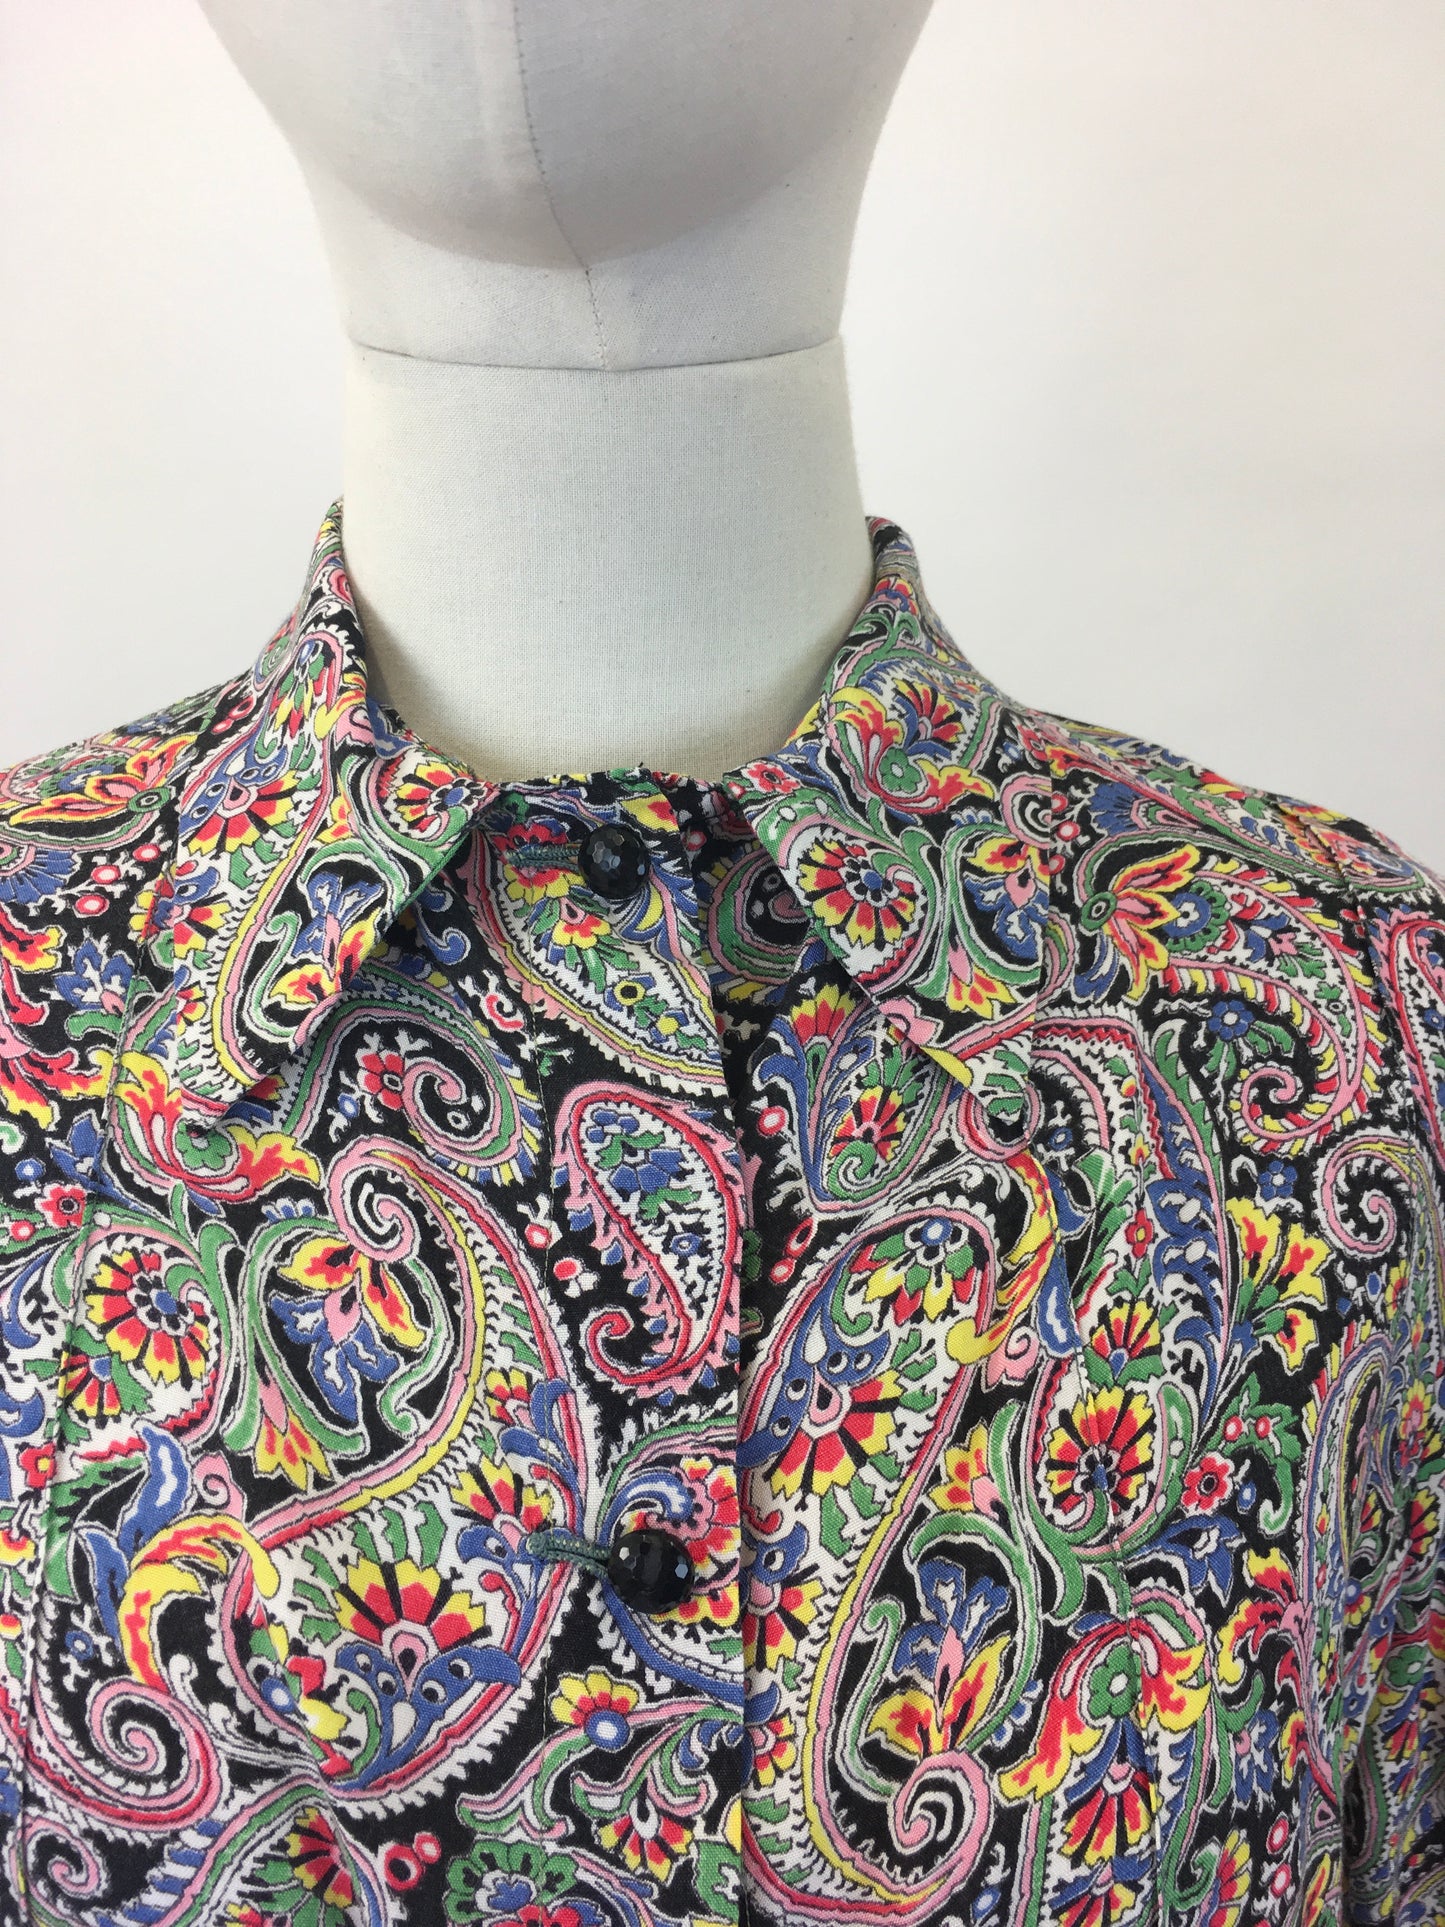 Original 1940's Fabulous Cotton Paisley Print Blouse - In Multi Coloured Brights